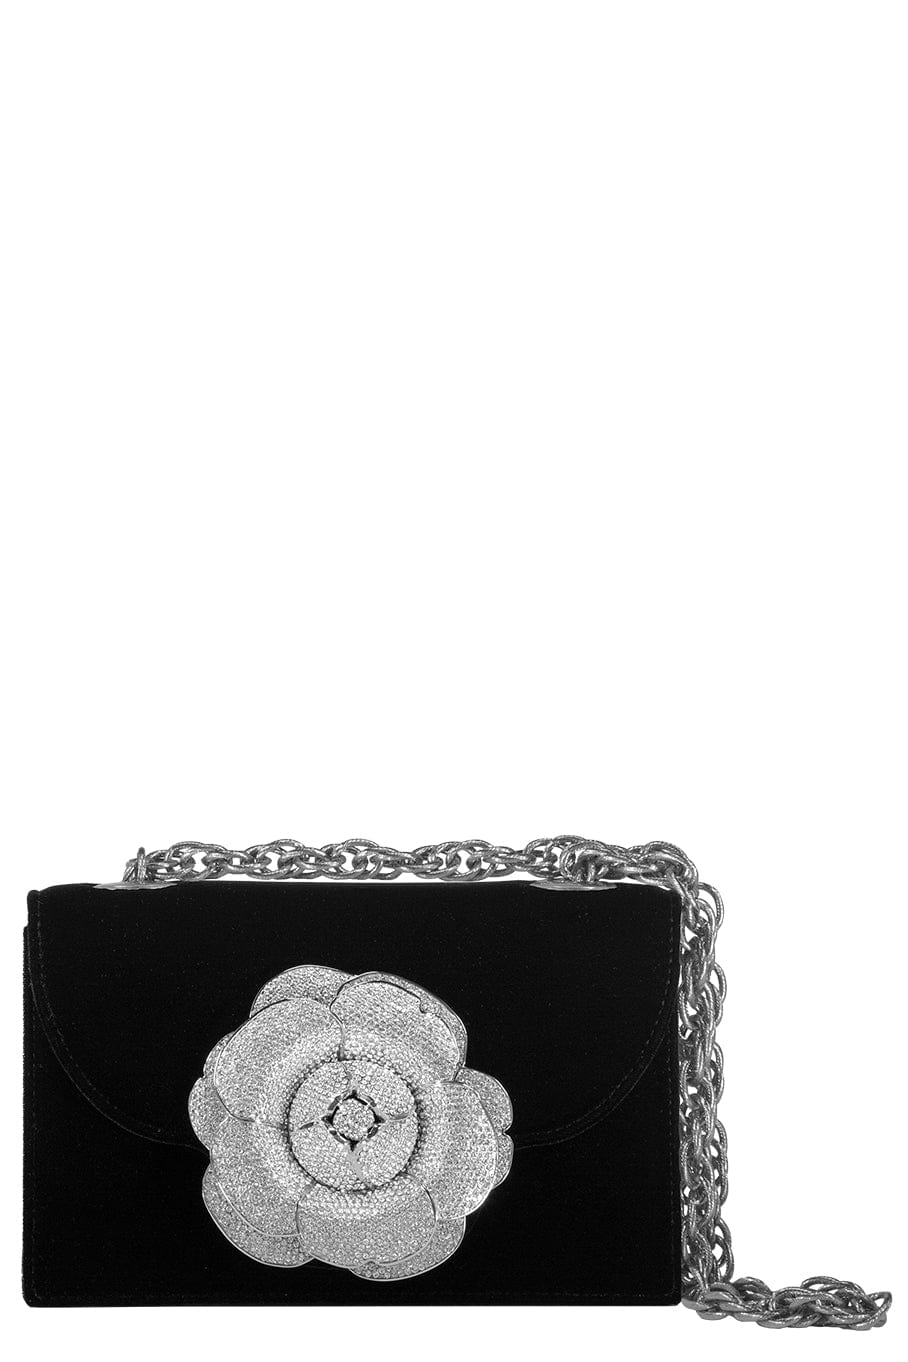 Oscar de La Renta Pre-owned Women's Leather Handbag - Black - One Size